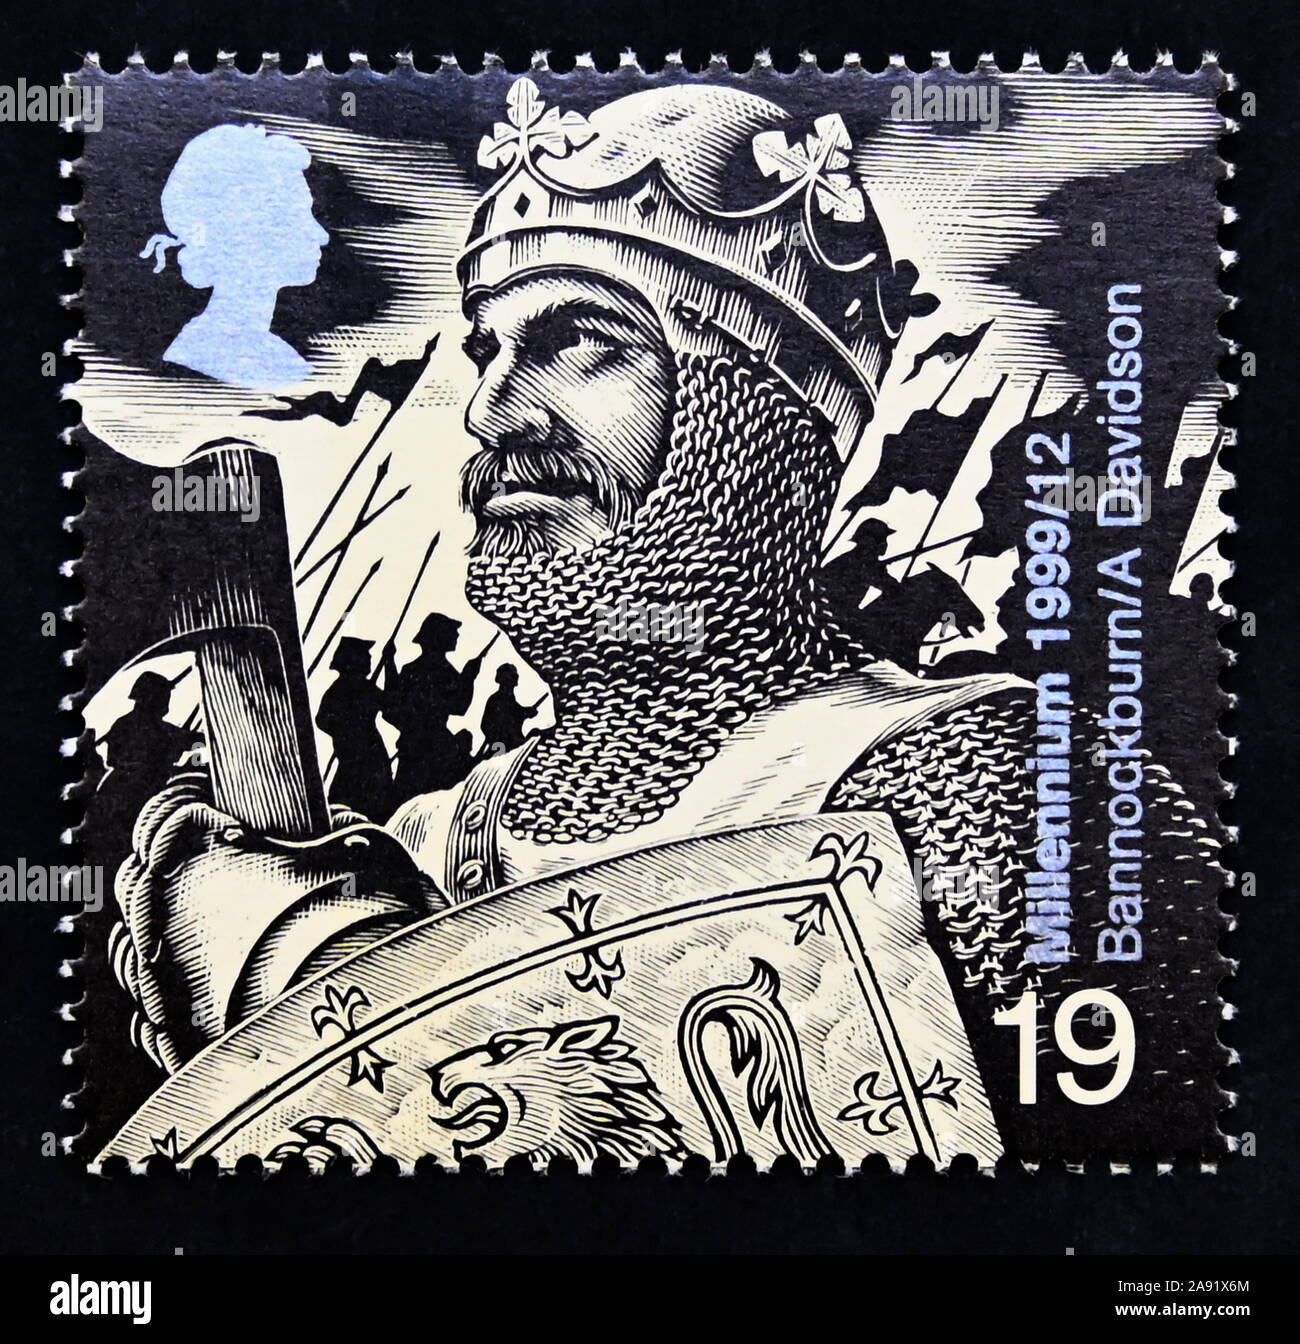 Postage stamp. Great Britain. Queen Elizabeth II. Millennium Series. The Soldier's Tale. Robert the Bruce (Battle of Bannockburn, 1314). 19p. Stock Photo